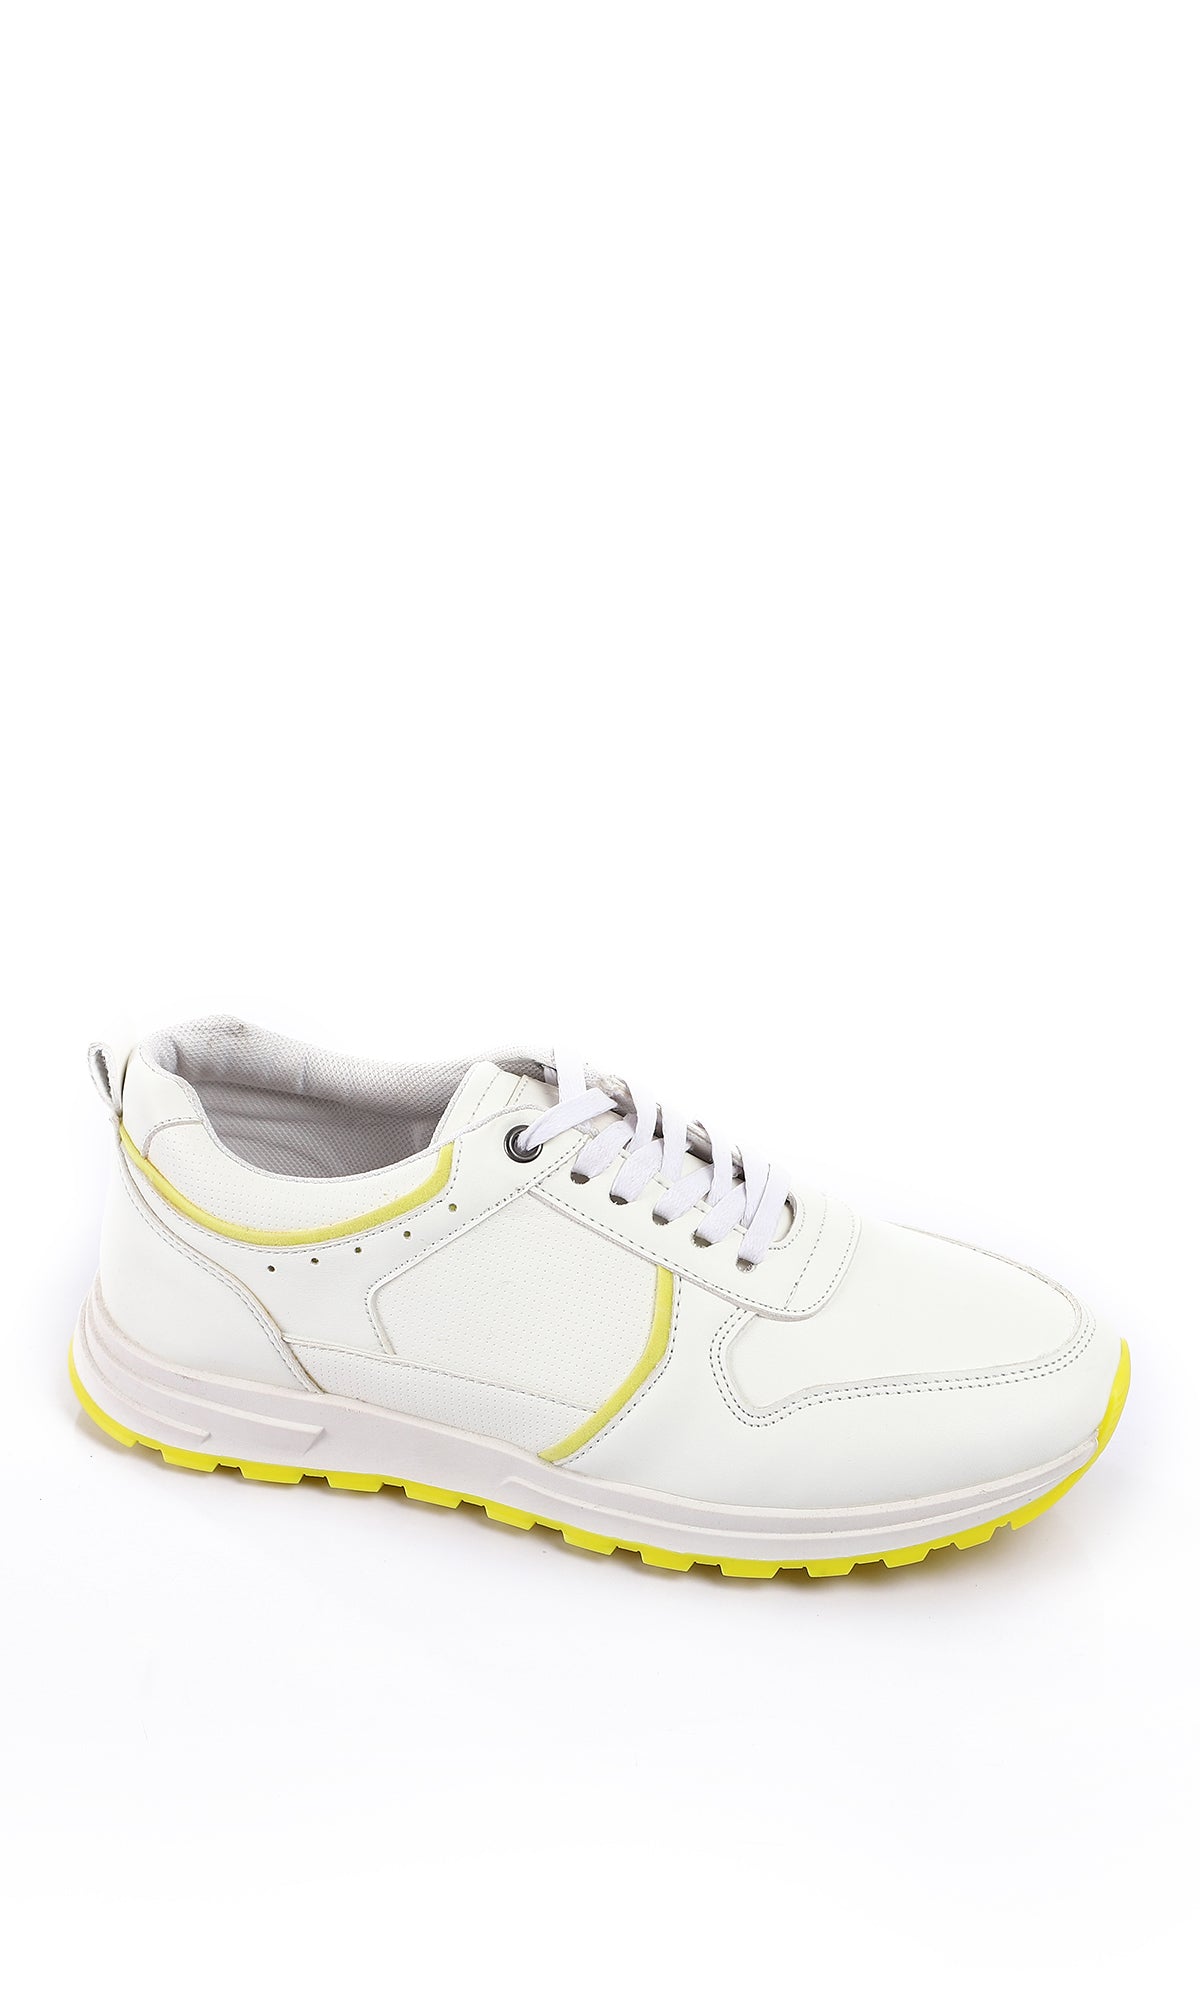 O160063 Bi-Tone Leather Lace Up Fashion Sneakers - White & Yellow